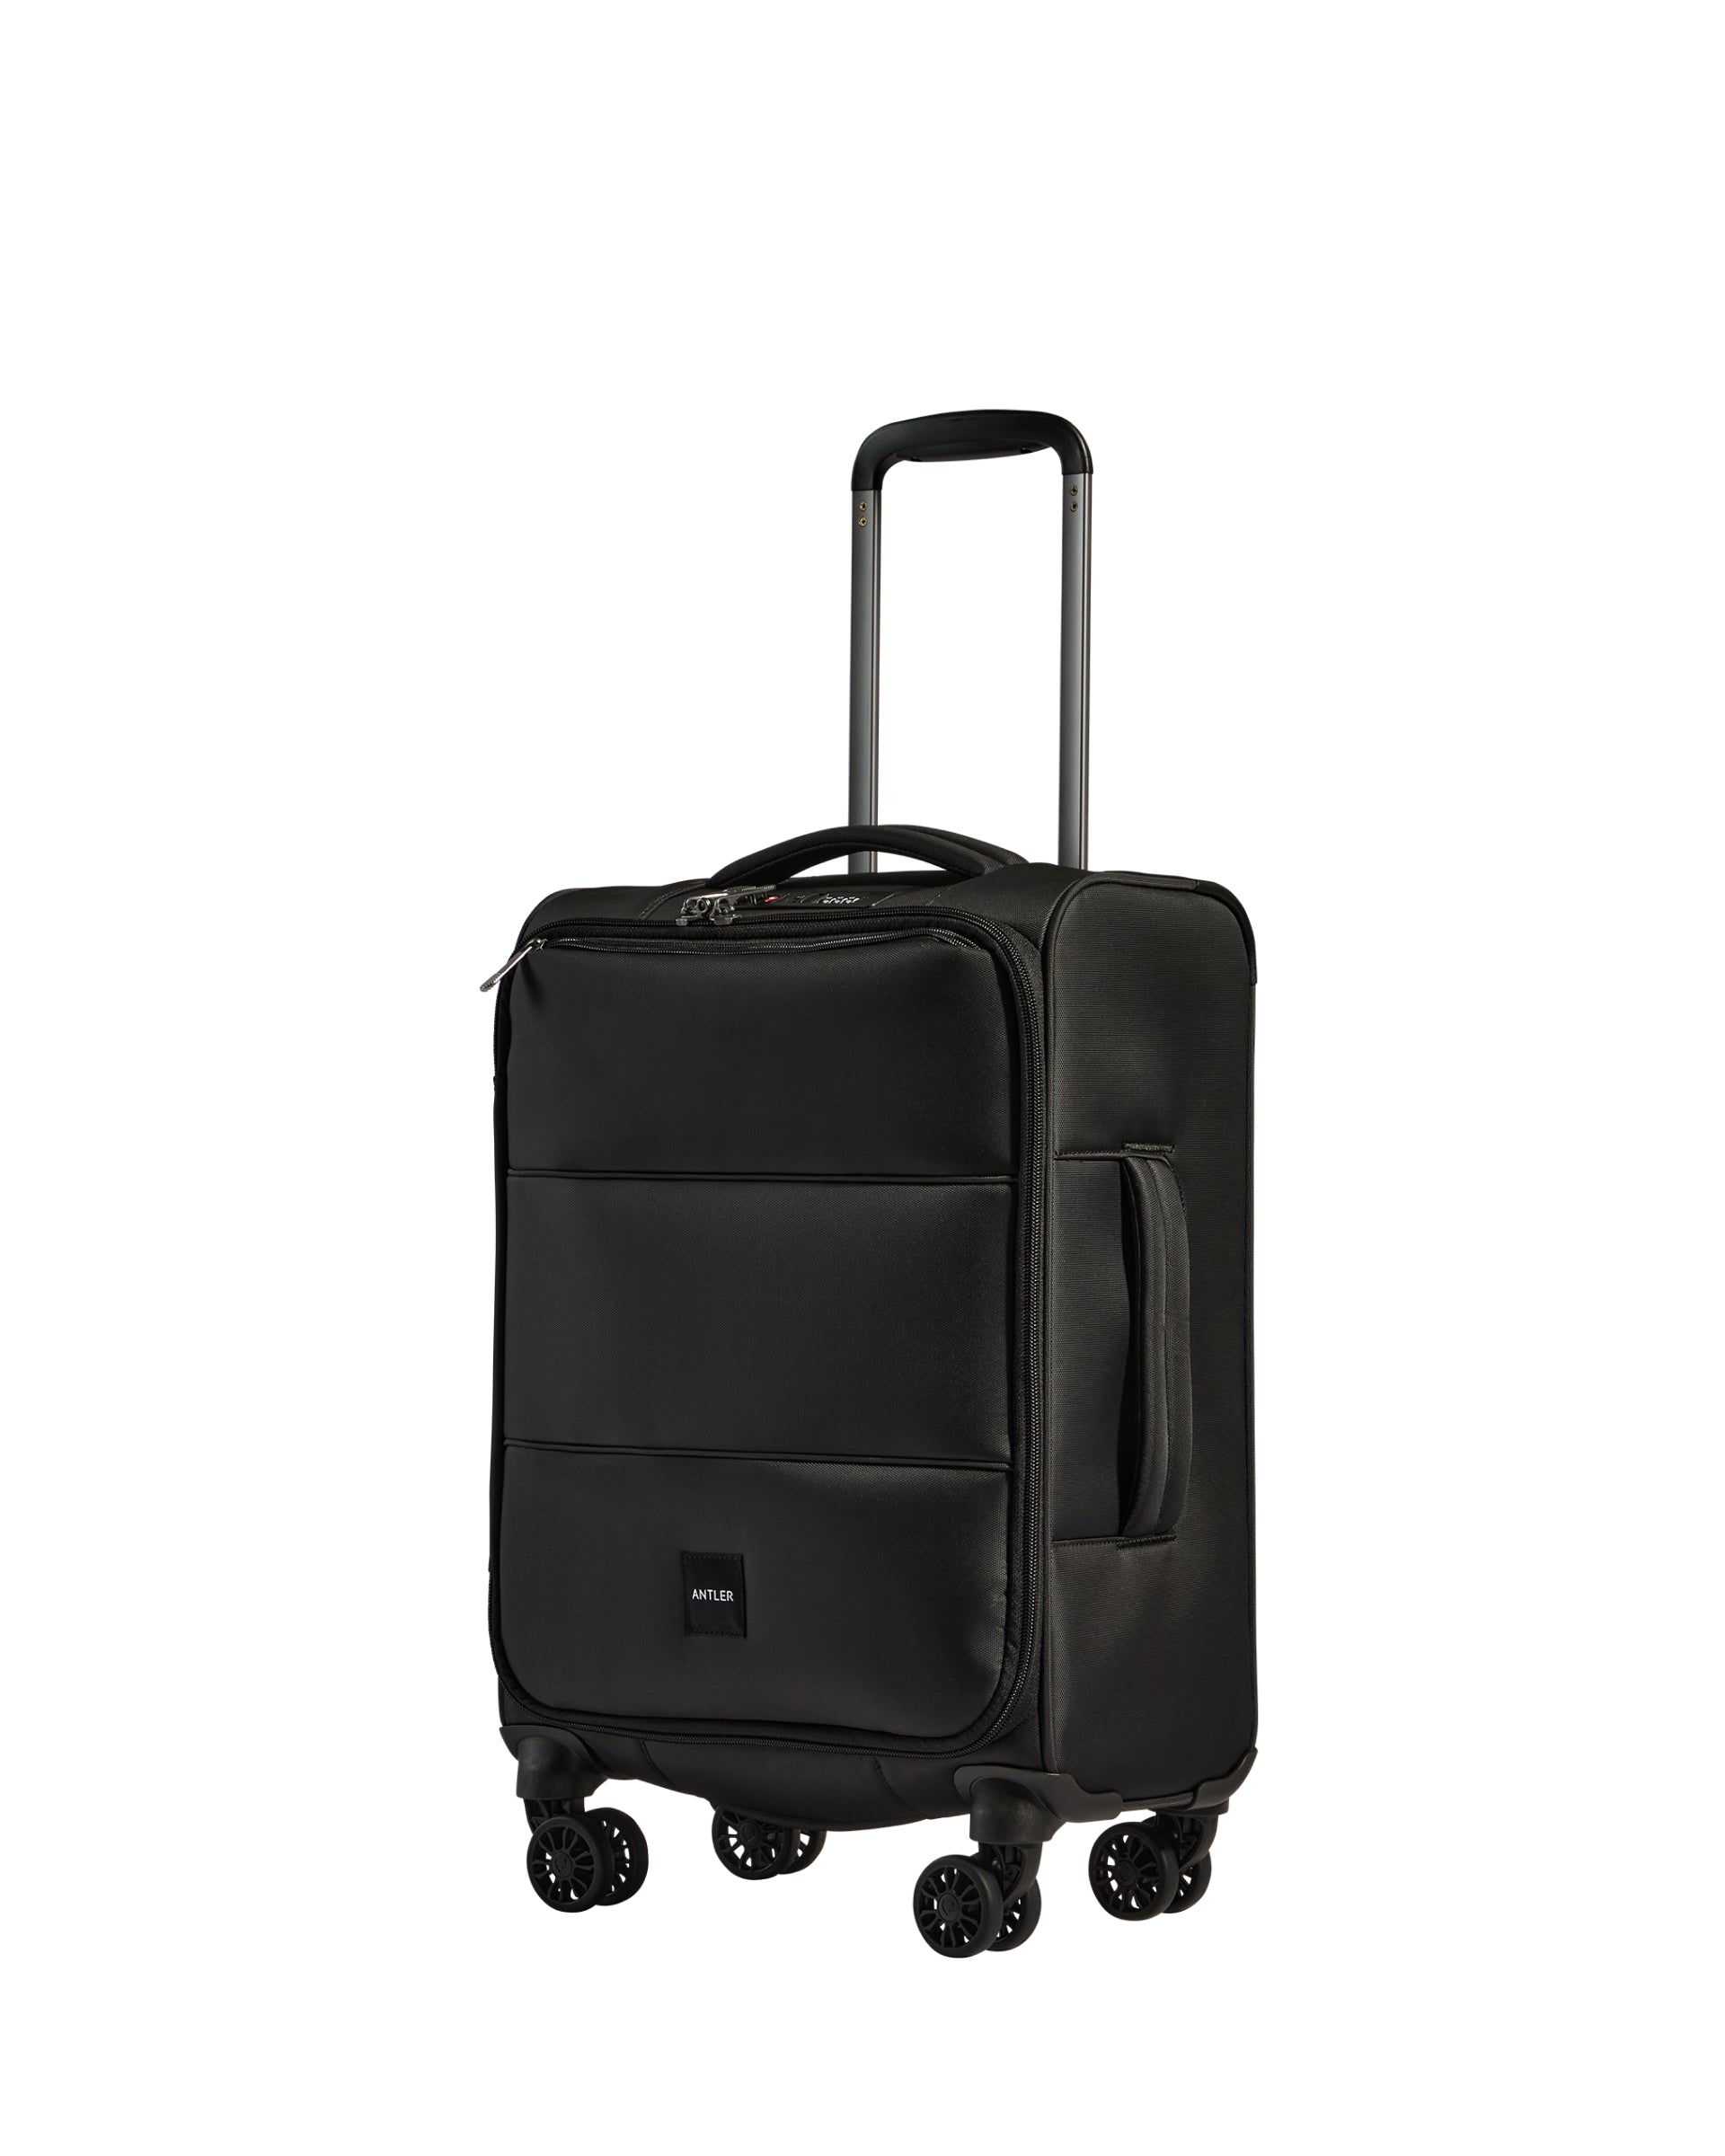 View Antler Soft Stripe Cabin Suitcase In Black Size 20cm x 55cm x 35cm information